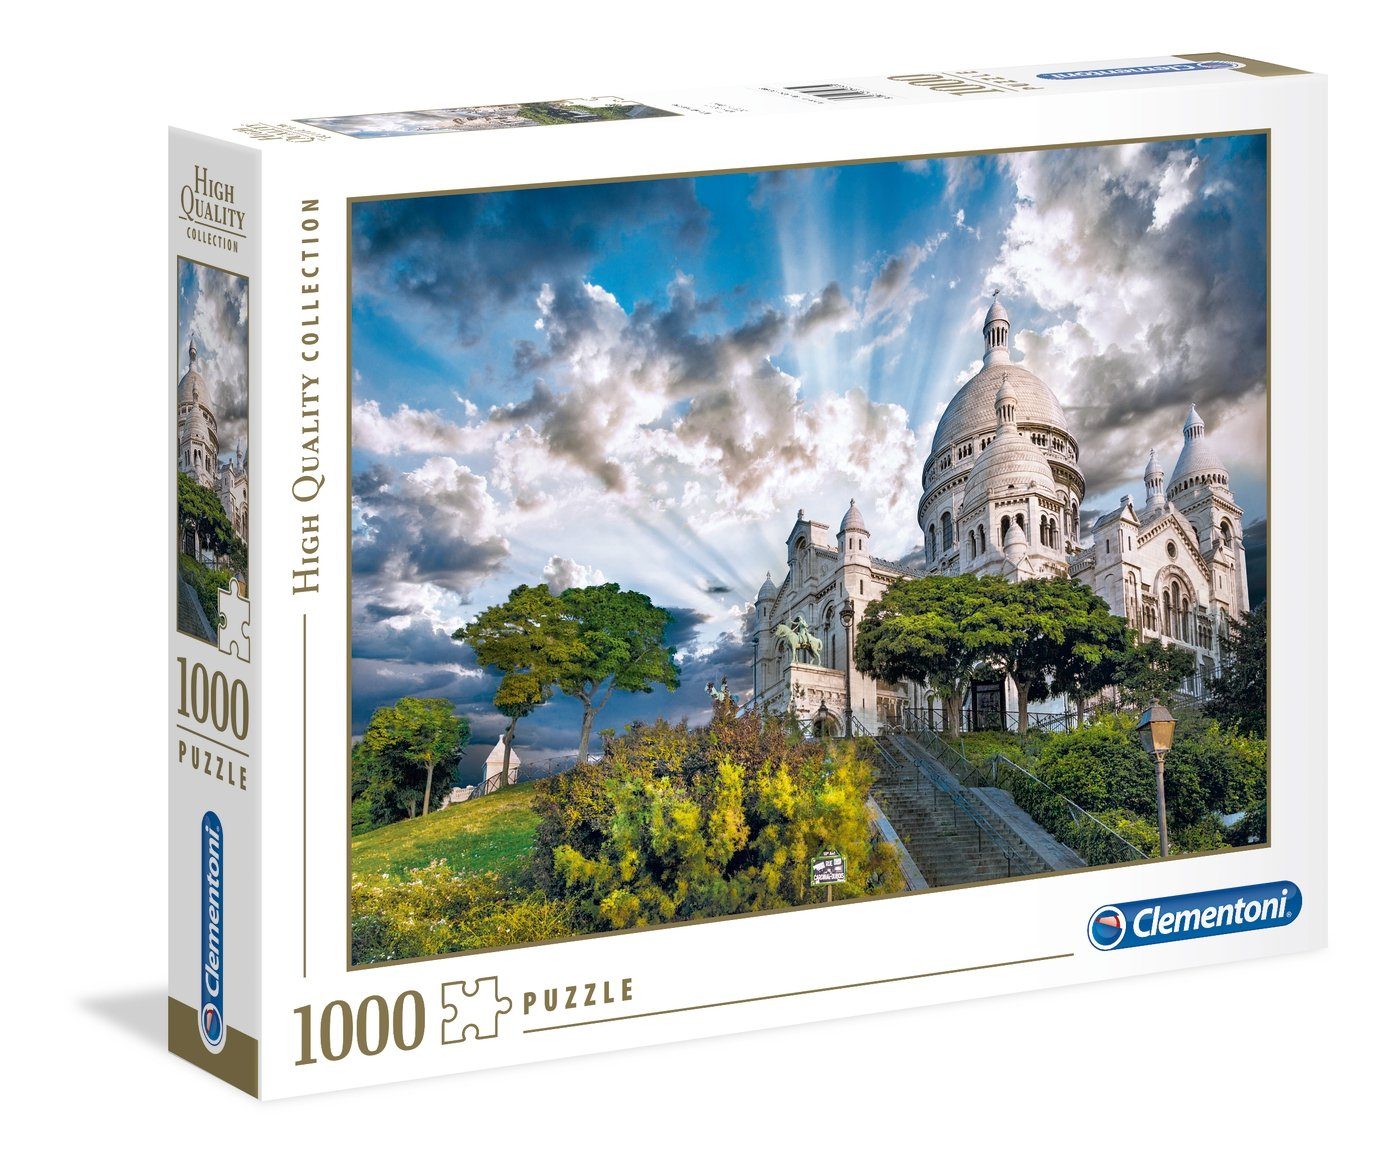 Clementoni® Puzzle Clementoni 39383 Montmarte 1000 Teile Puzzle, 1000 Puzzleteile, Made in Europe